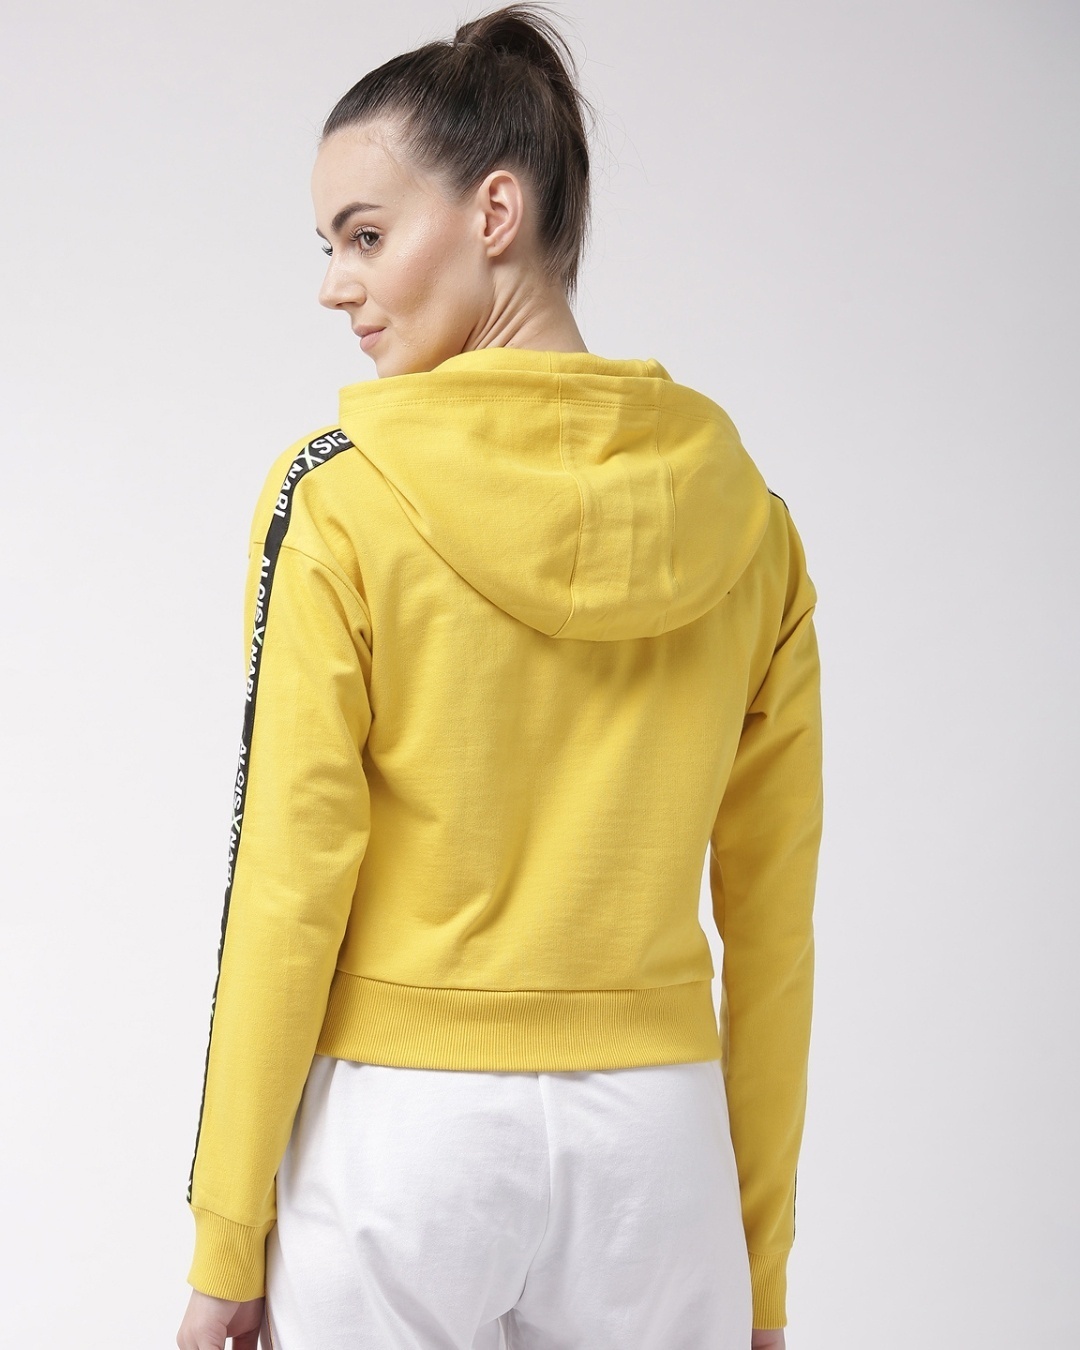 Shop Women's Yellow Hooded Regular Fit Jacket-Design